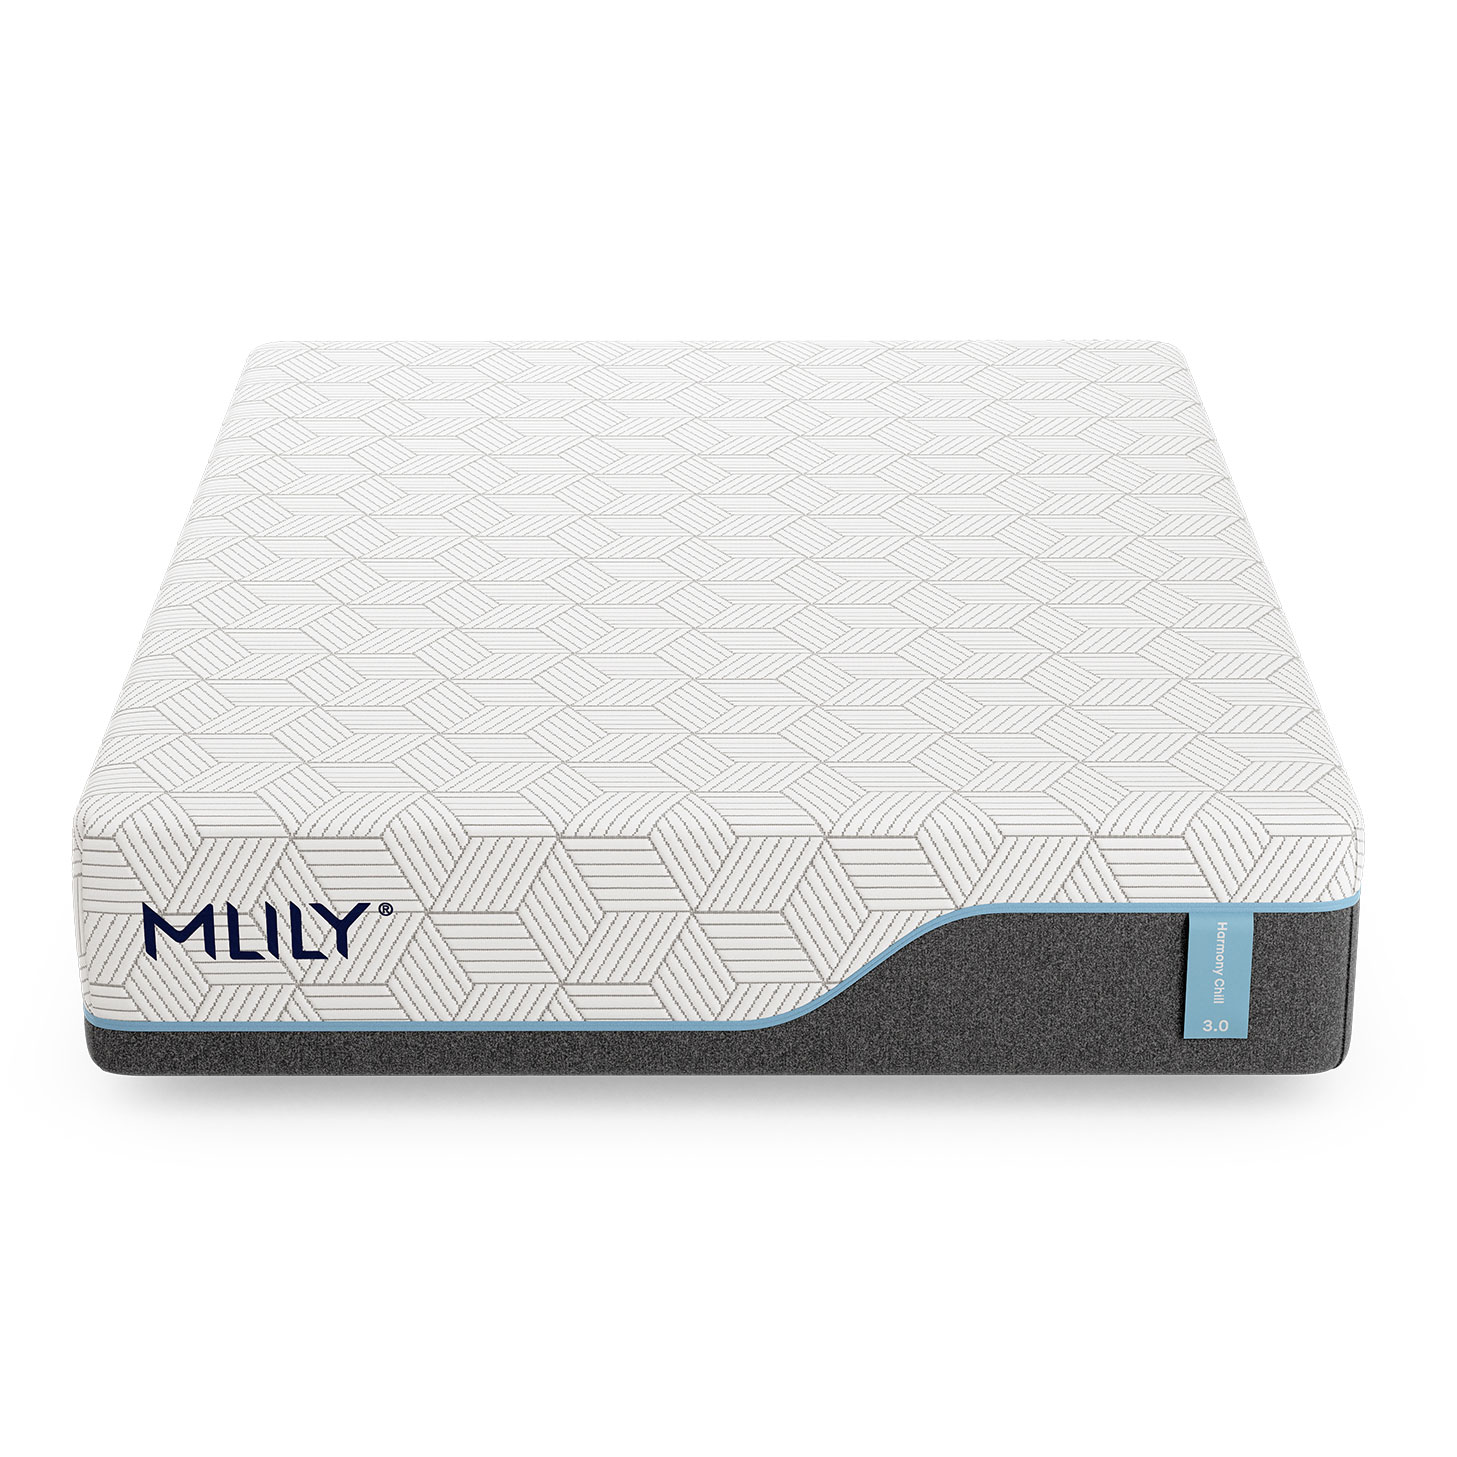 Mlily_Harmony_Chill_3.0_Memory_Foam_mattress